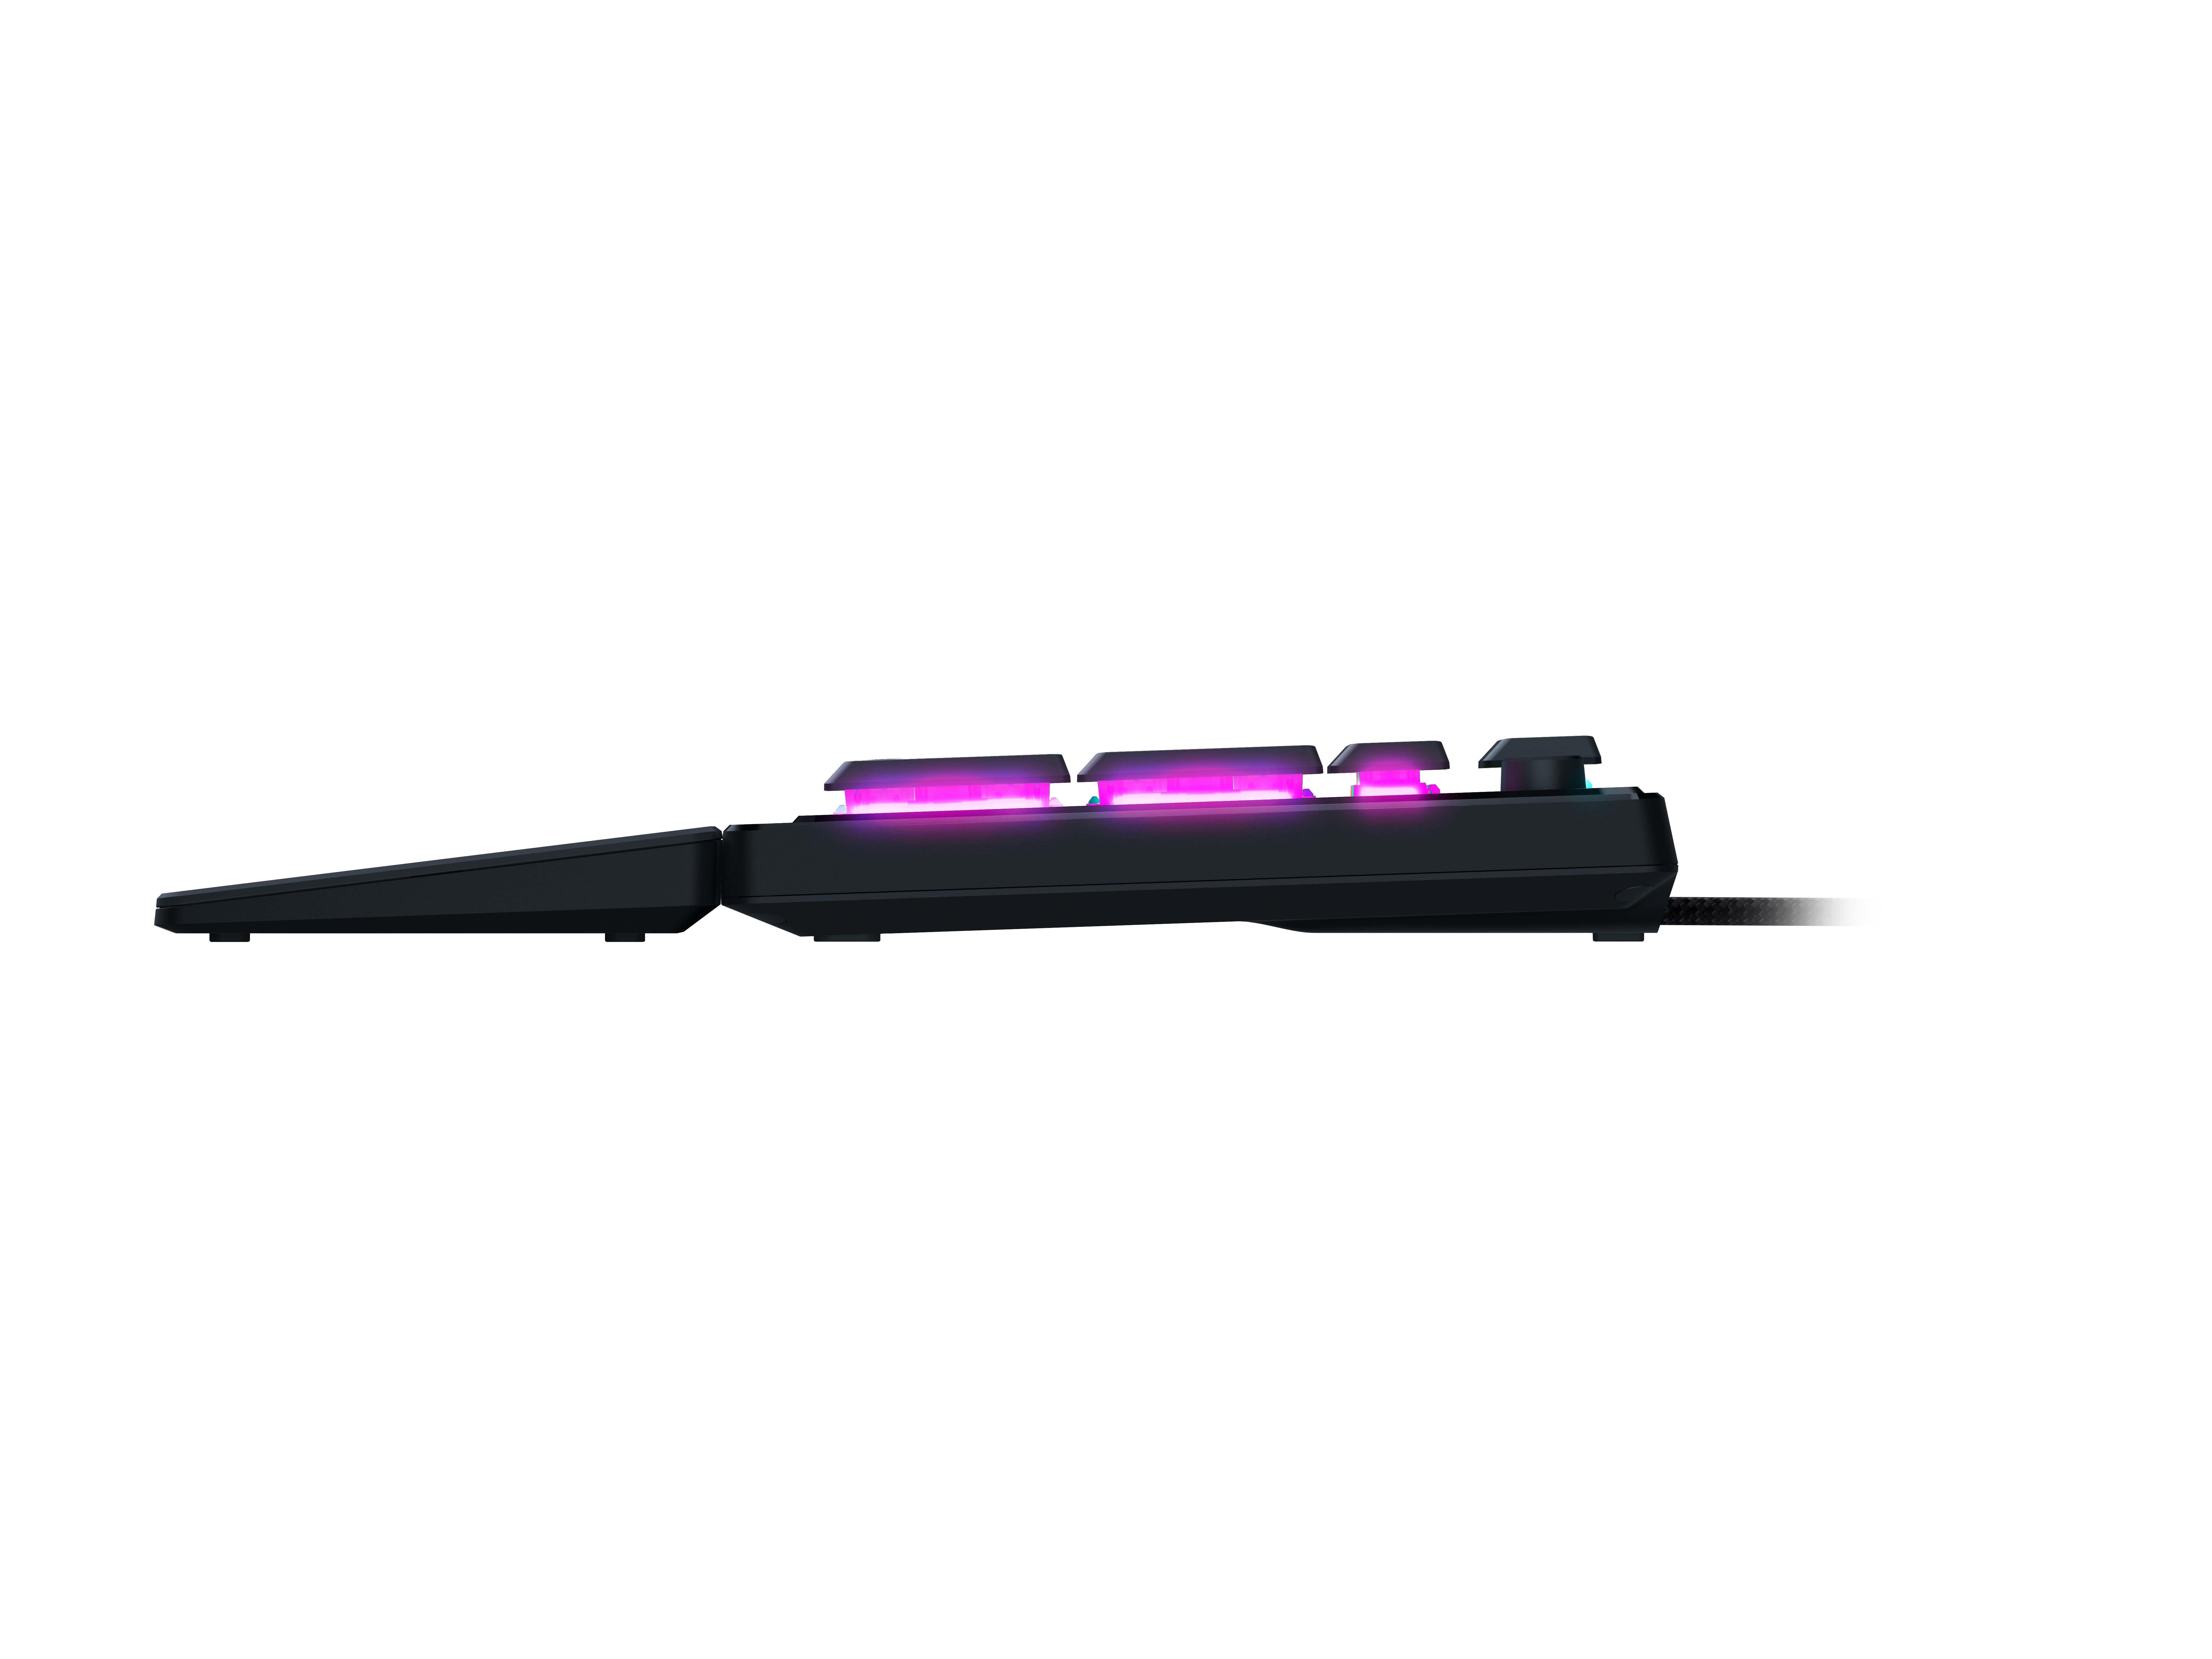  Razer Ornata V3 TKL Gaming Keyboard: Low-Profile Keys -  Mecha-Membrane Switches - UV-Coated Keycaps - Backlit Media Keys - 8-Zone  RGB Lighting - Spill-Resistant - Magnetic Wrist Wrest - Classic Black 